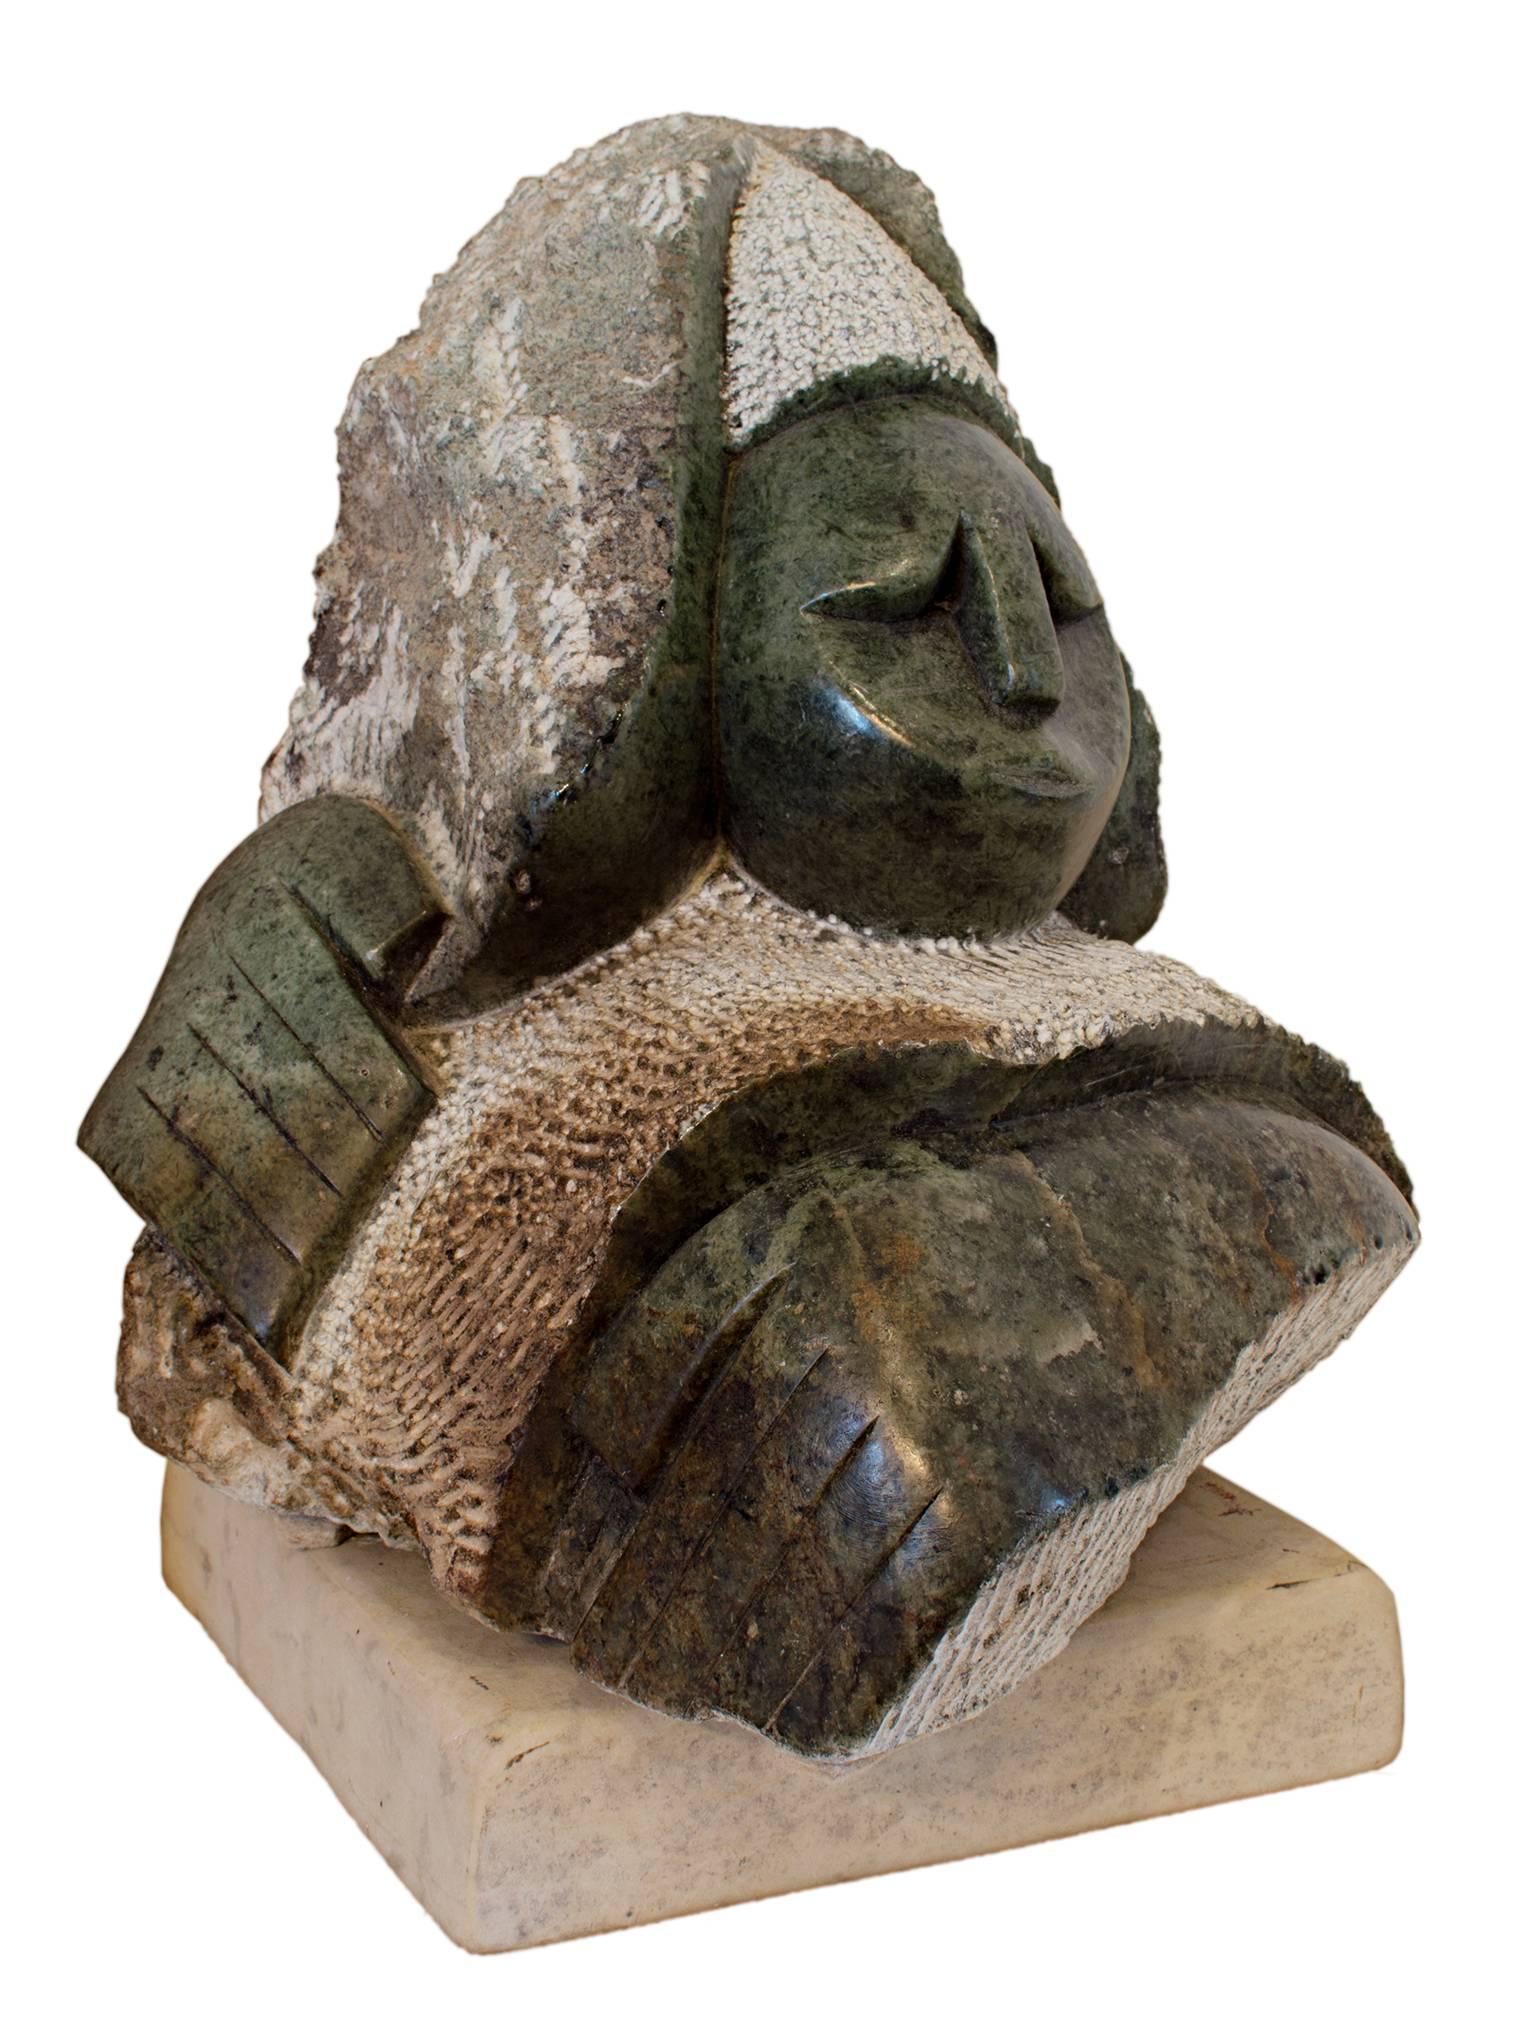 Unknown Figurative Sculpture - "Judge, " Original Green Serpentine Stone Sculpture by Corlet a Shona sculptor